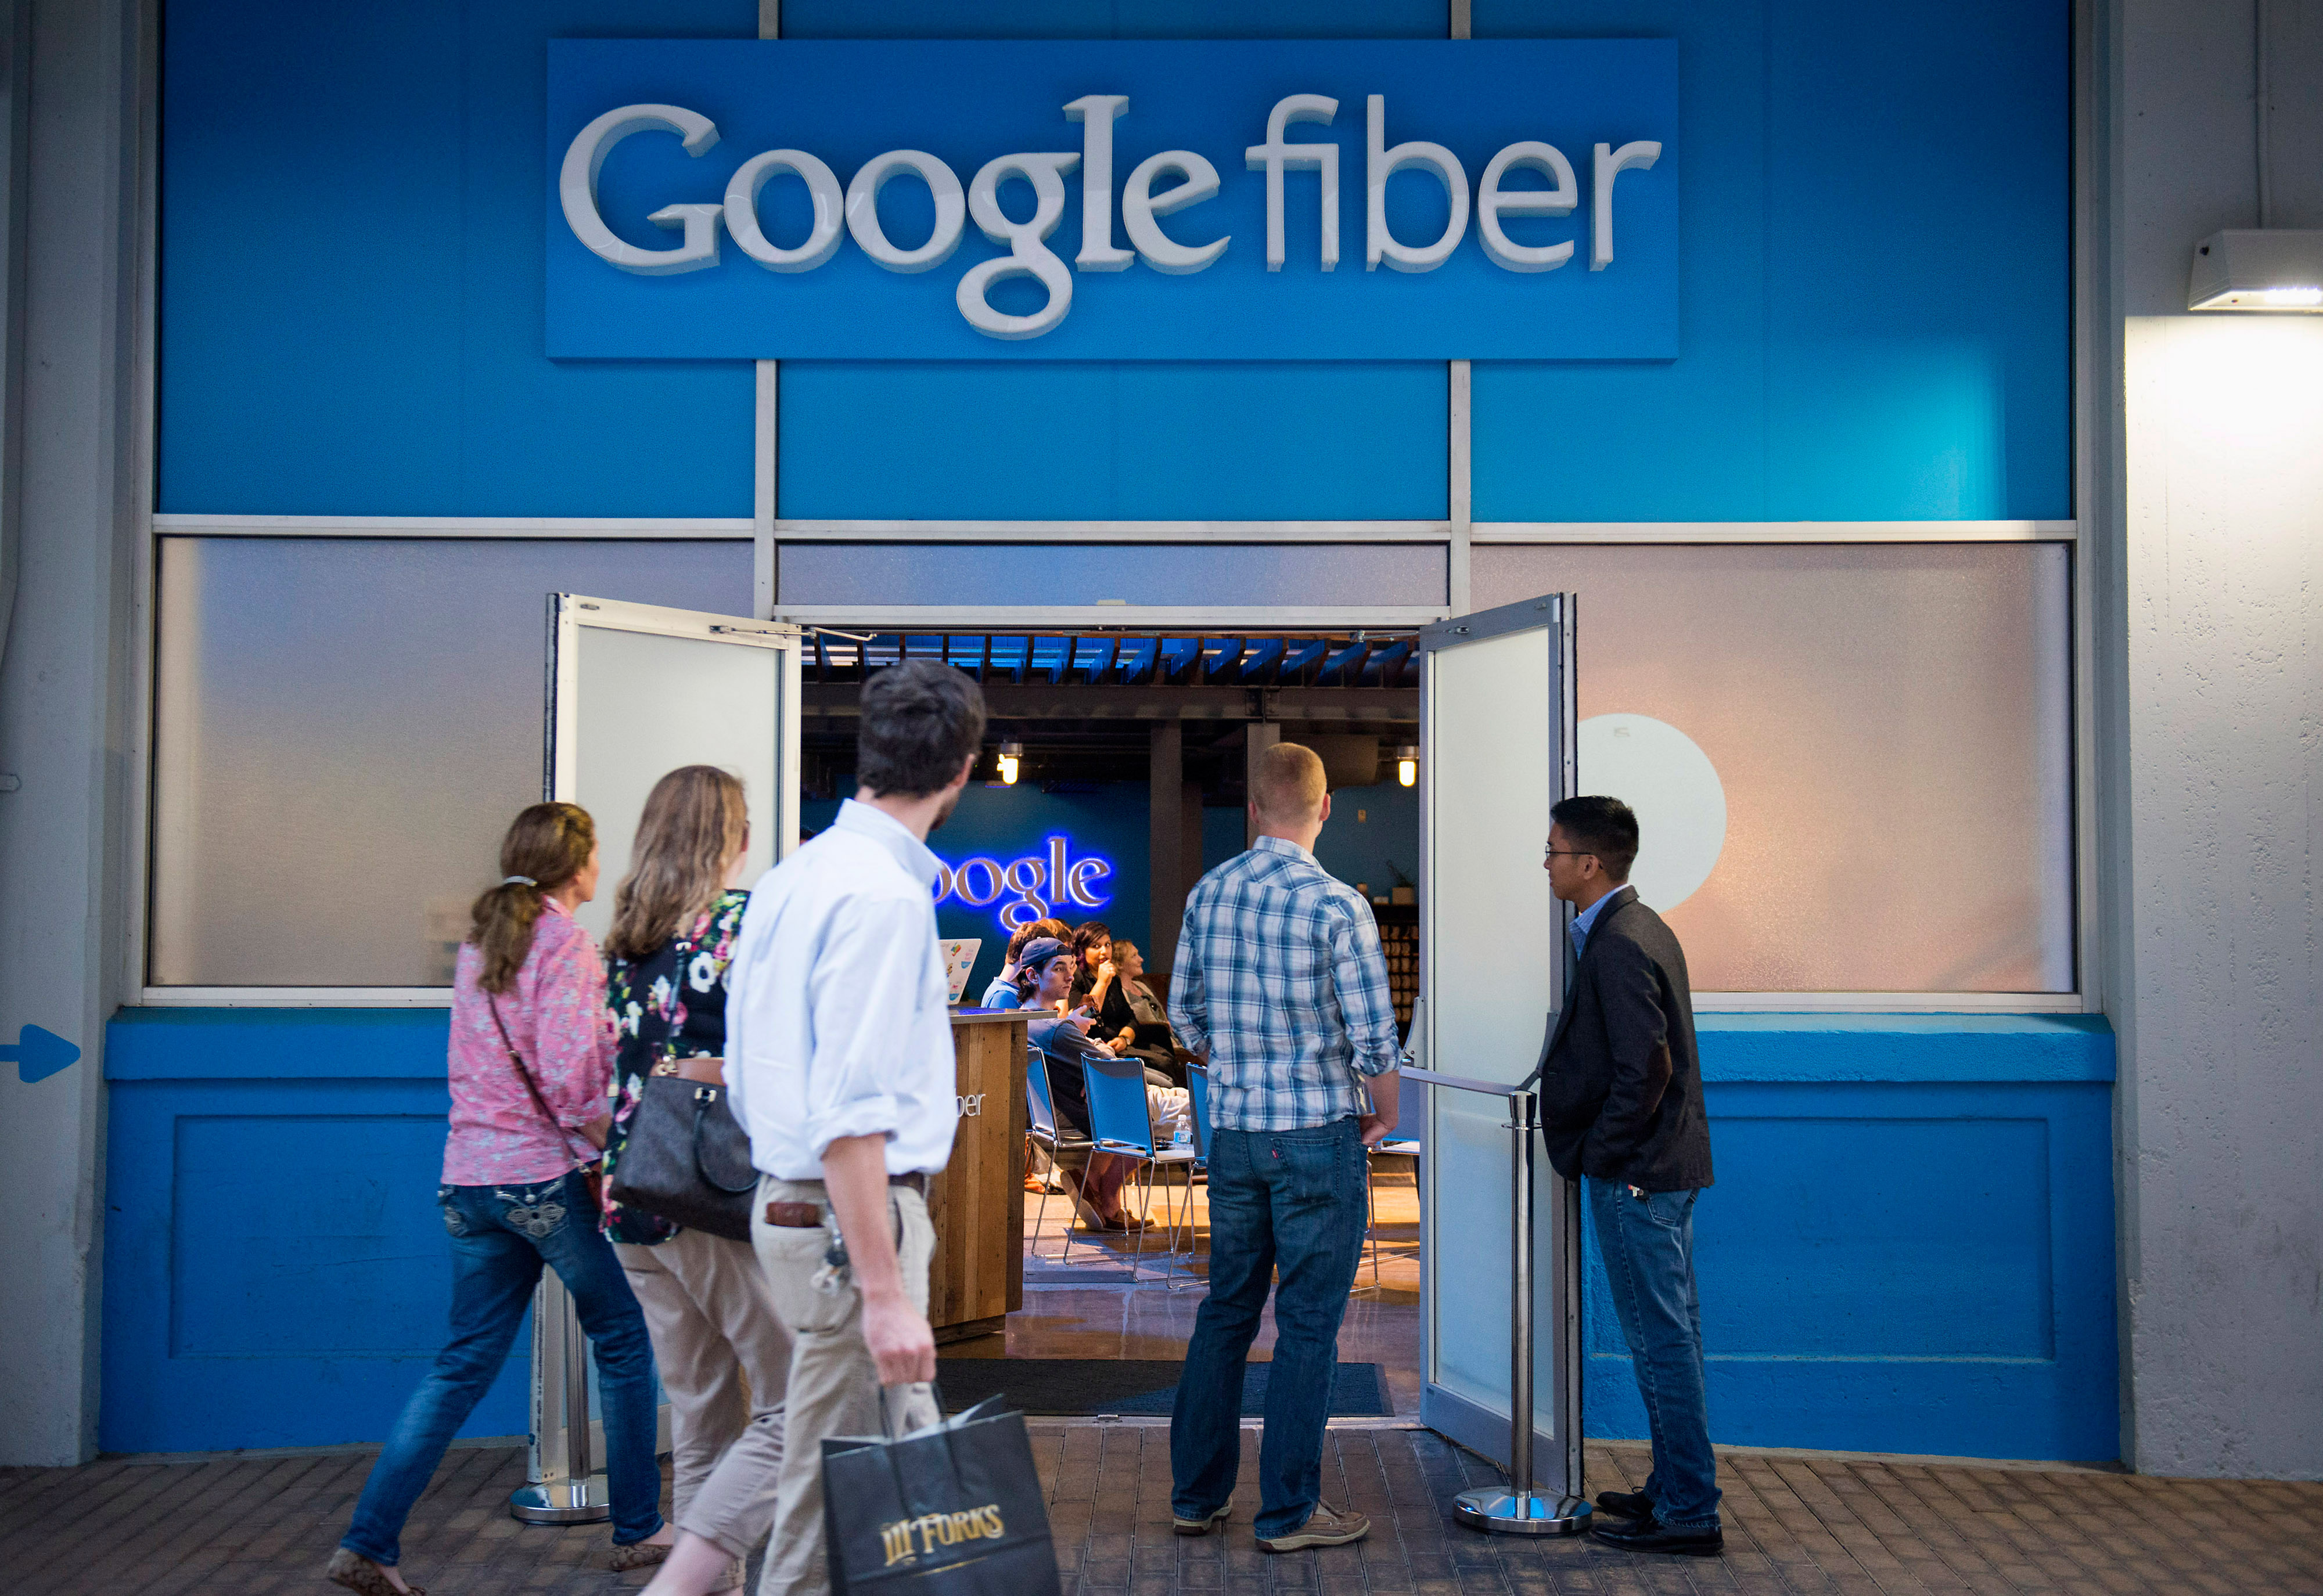 Google Fiber Has Internet Providers Scrambling to Improve Their Service